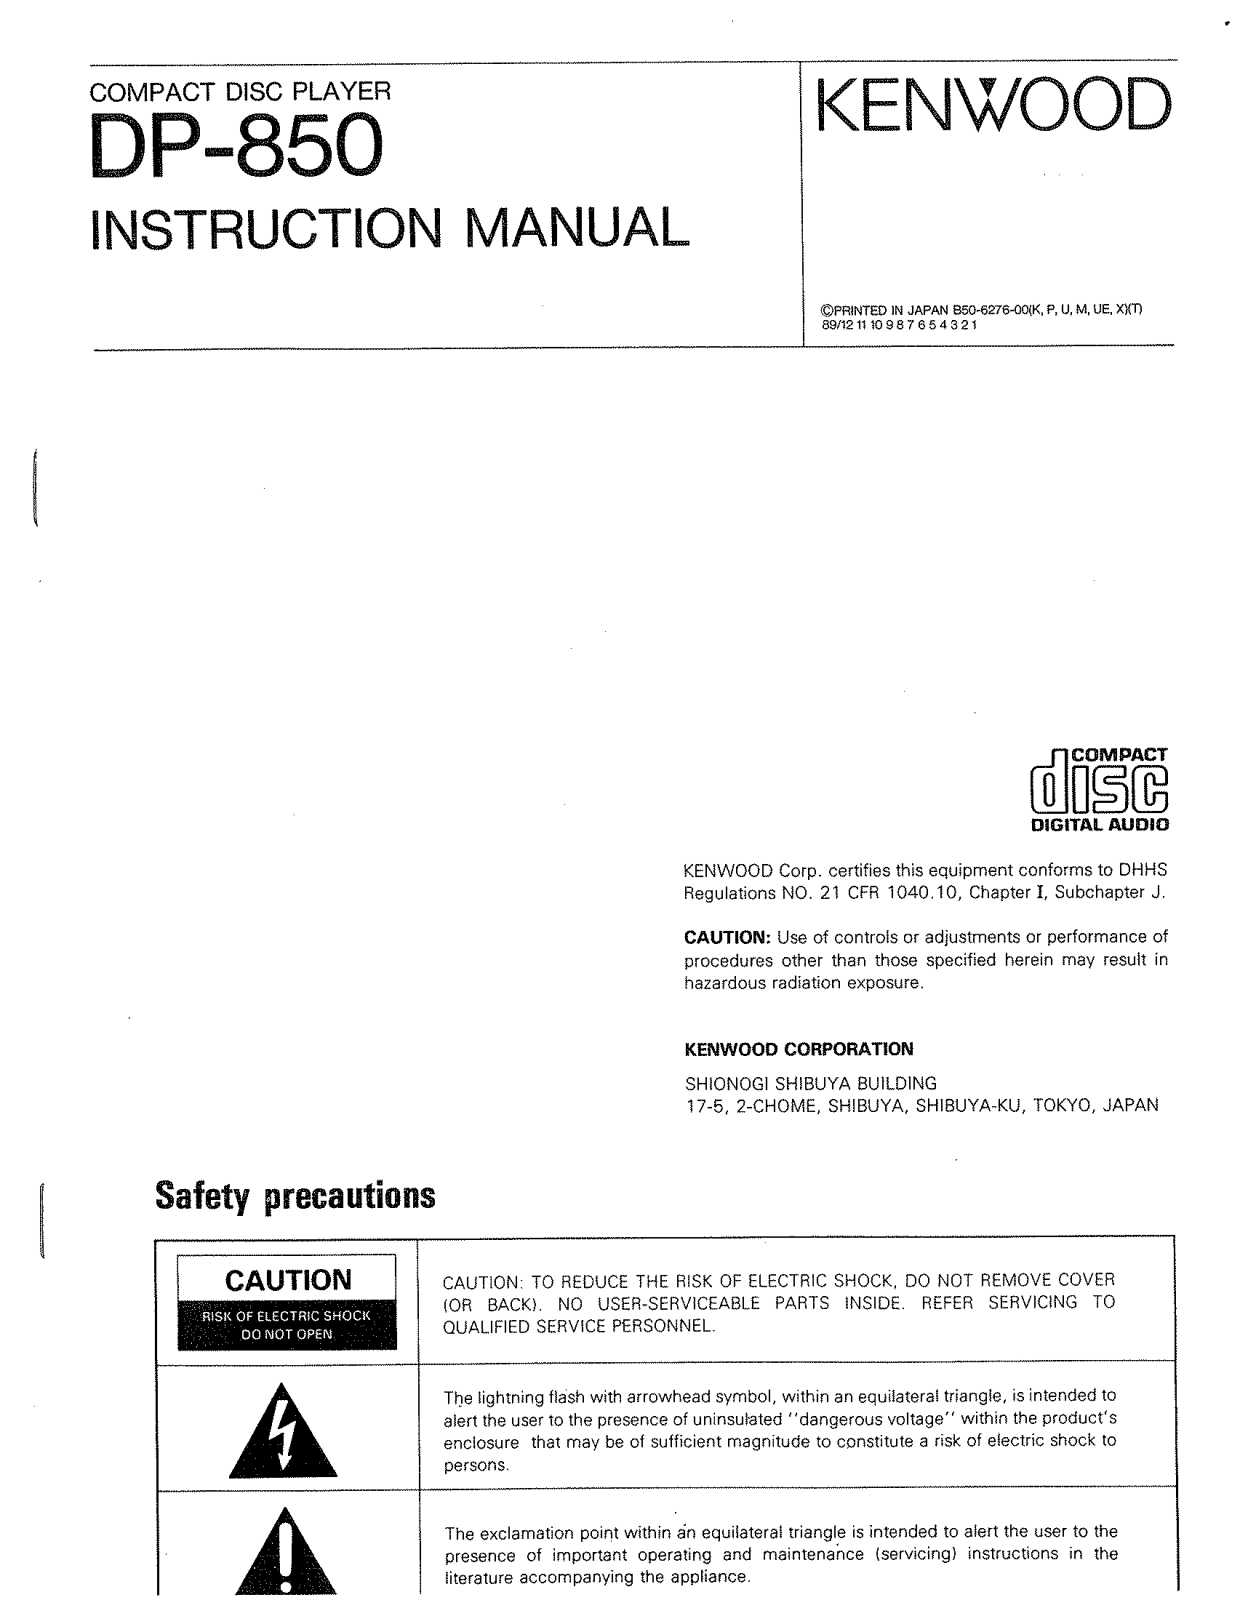 Kenwood DP-850 Owner's Manual